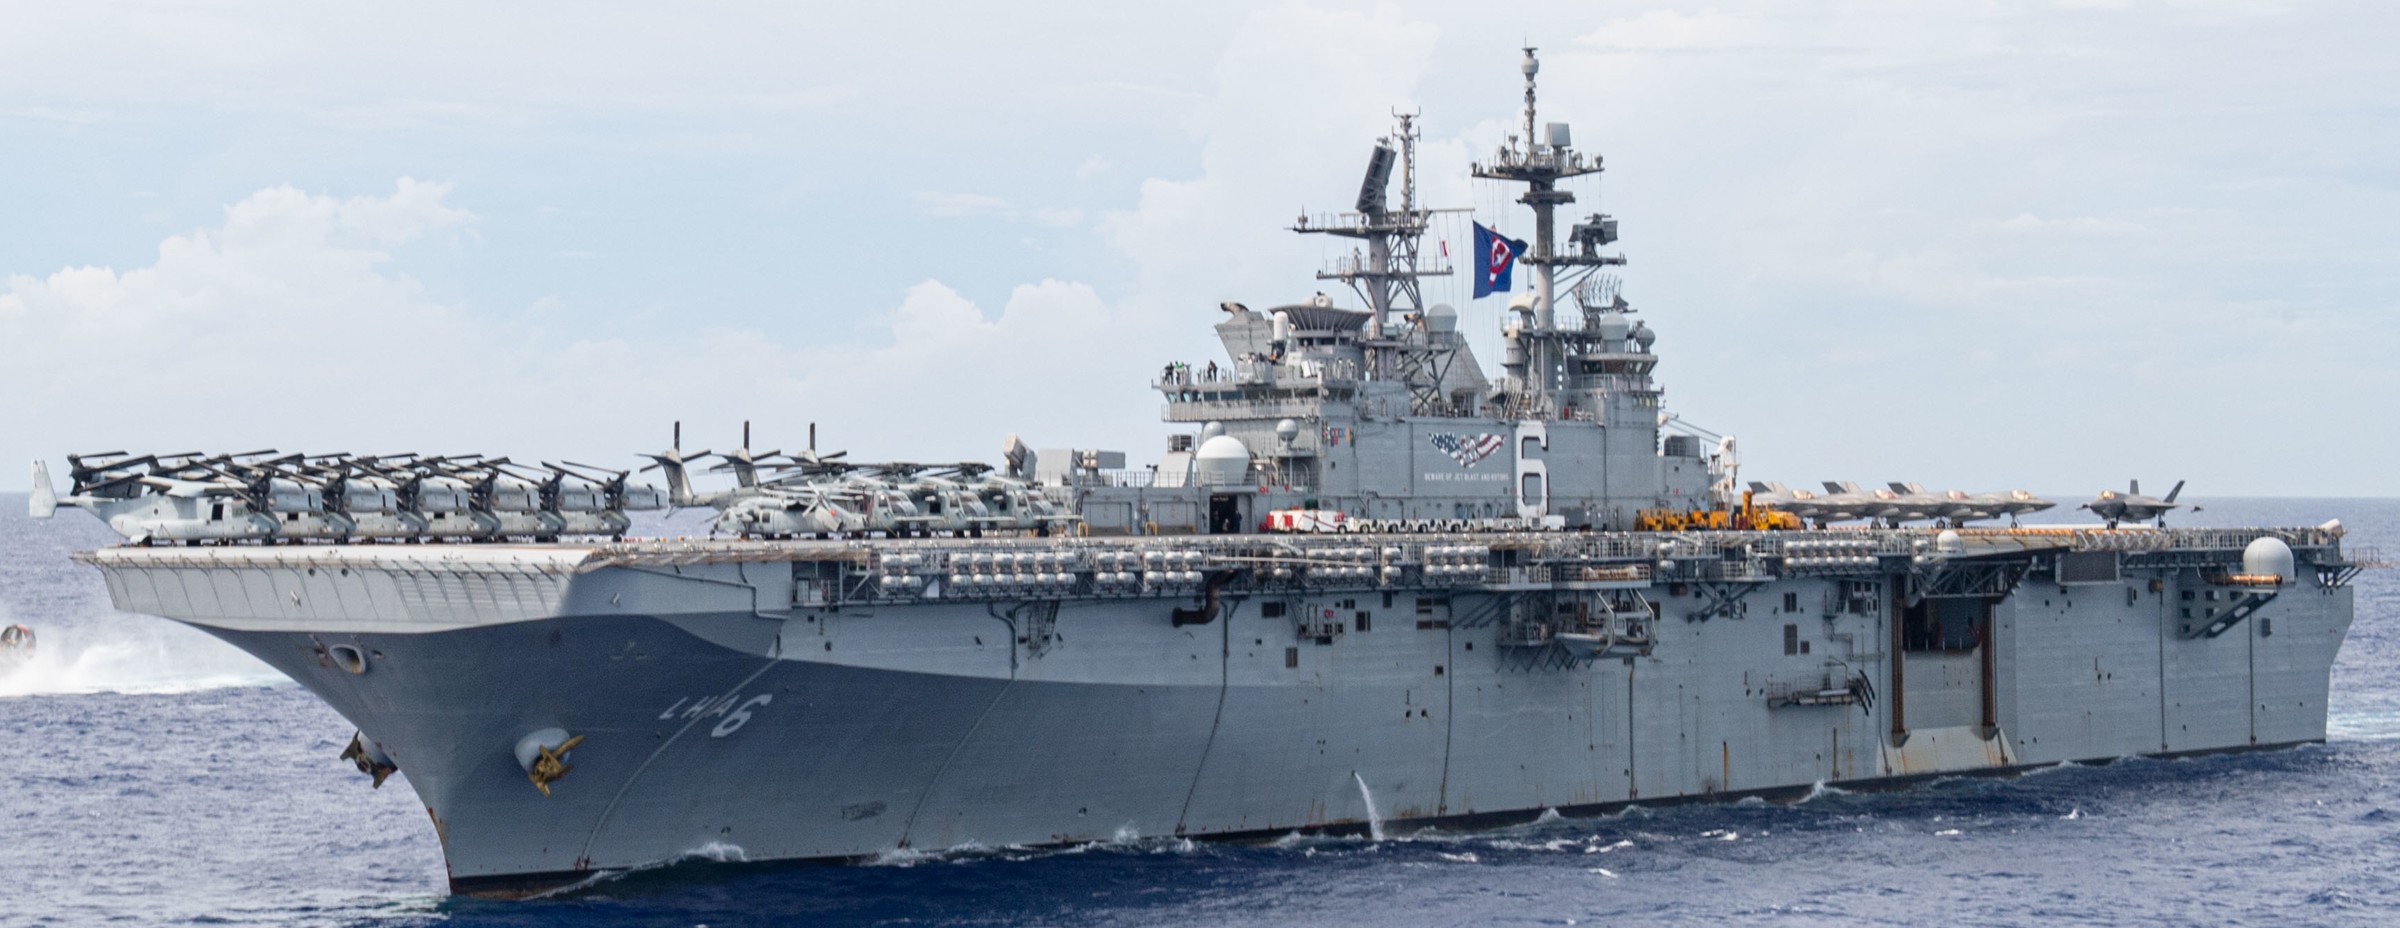 lha-6 uss america amphibious assault ship landing us navy marines vmm-265 rein 194